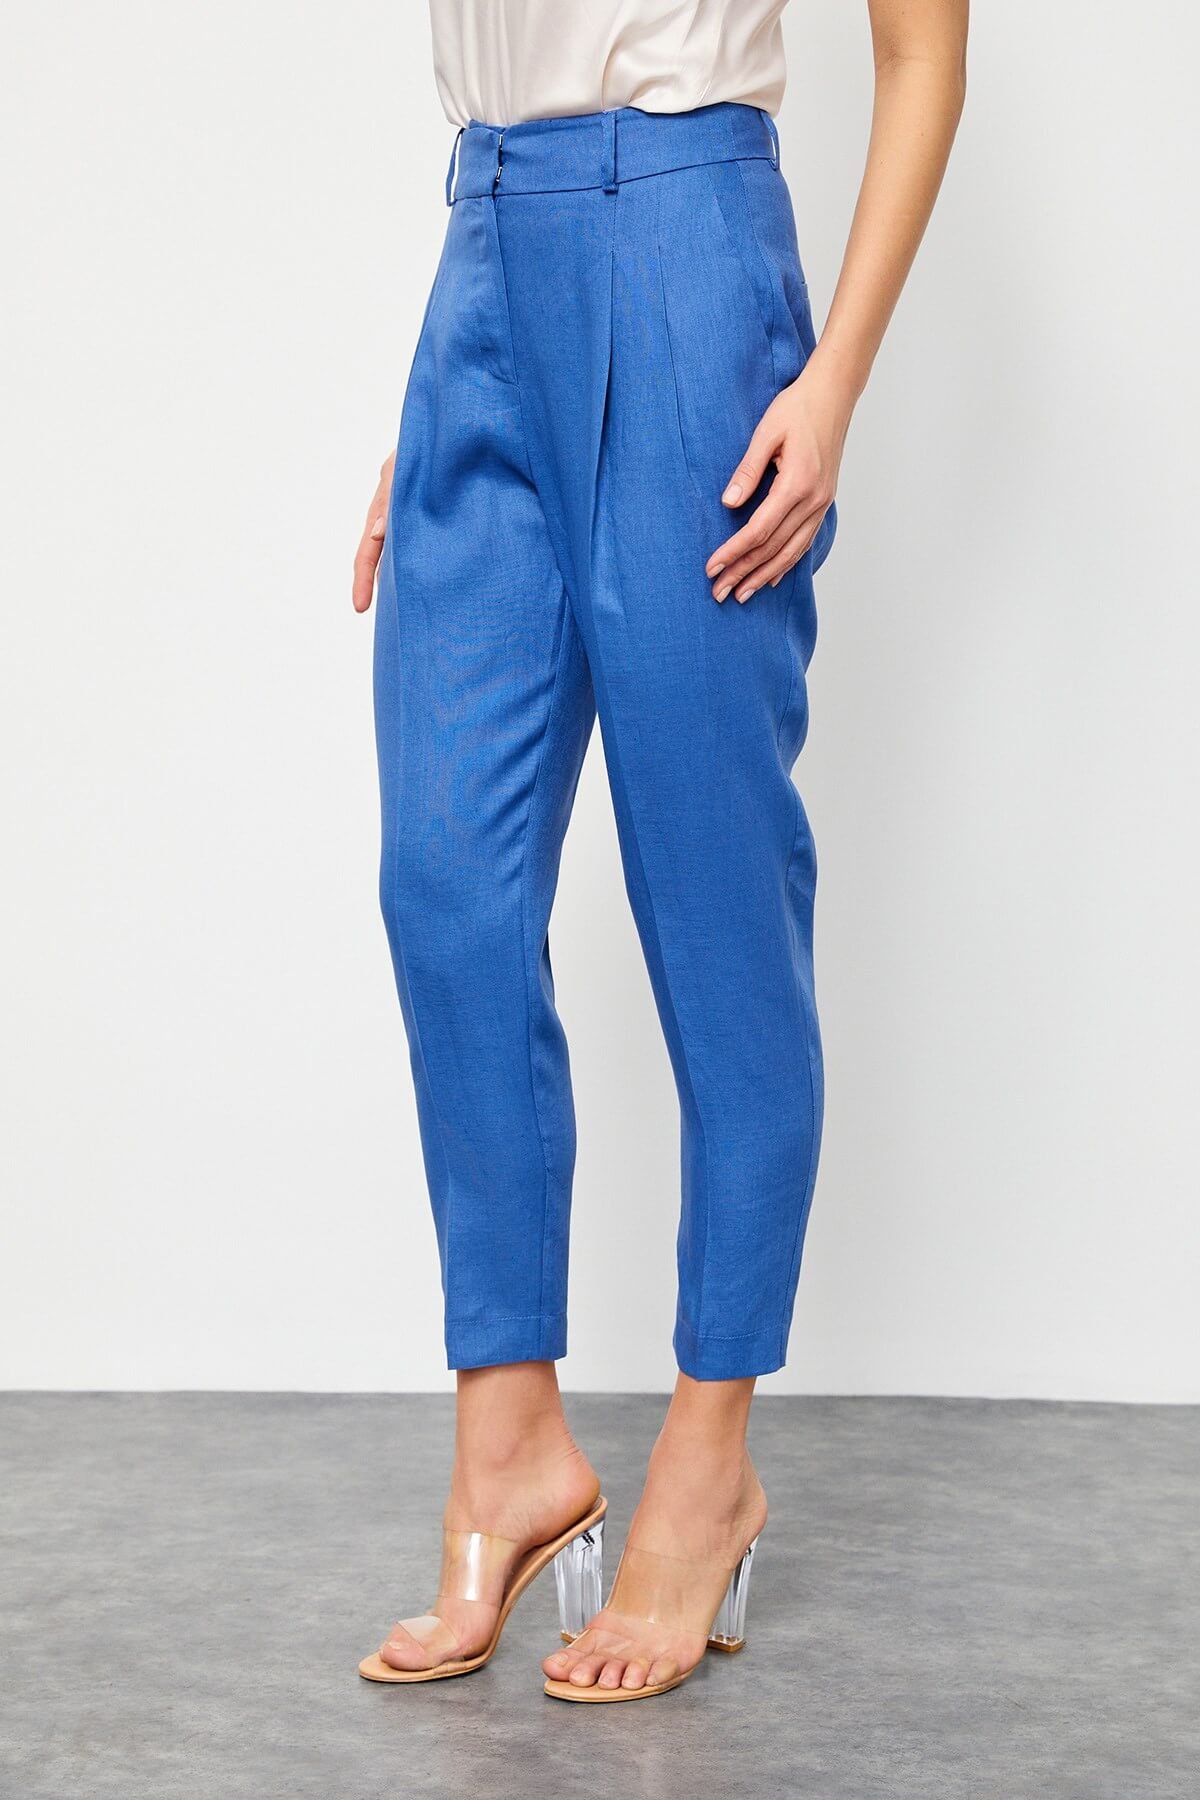 Kadın Mavi Keten Pantolon Ceket Takım ST050S9020802 | Setre